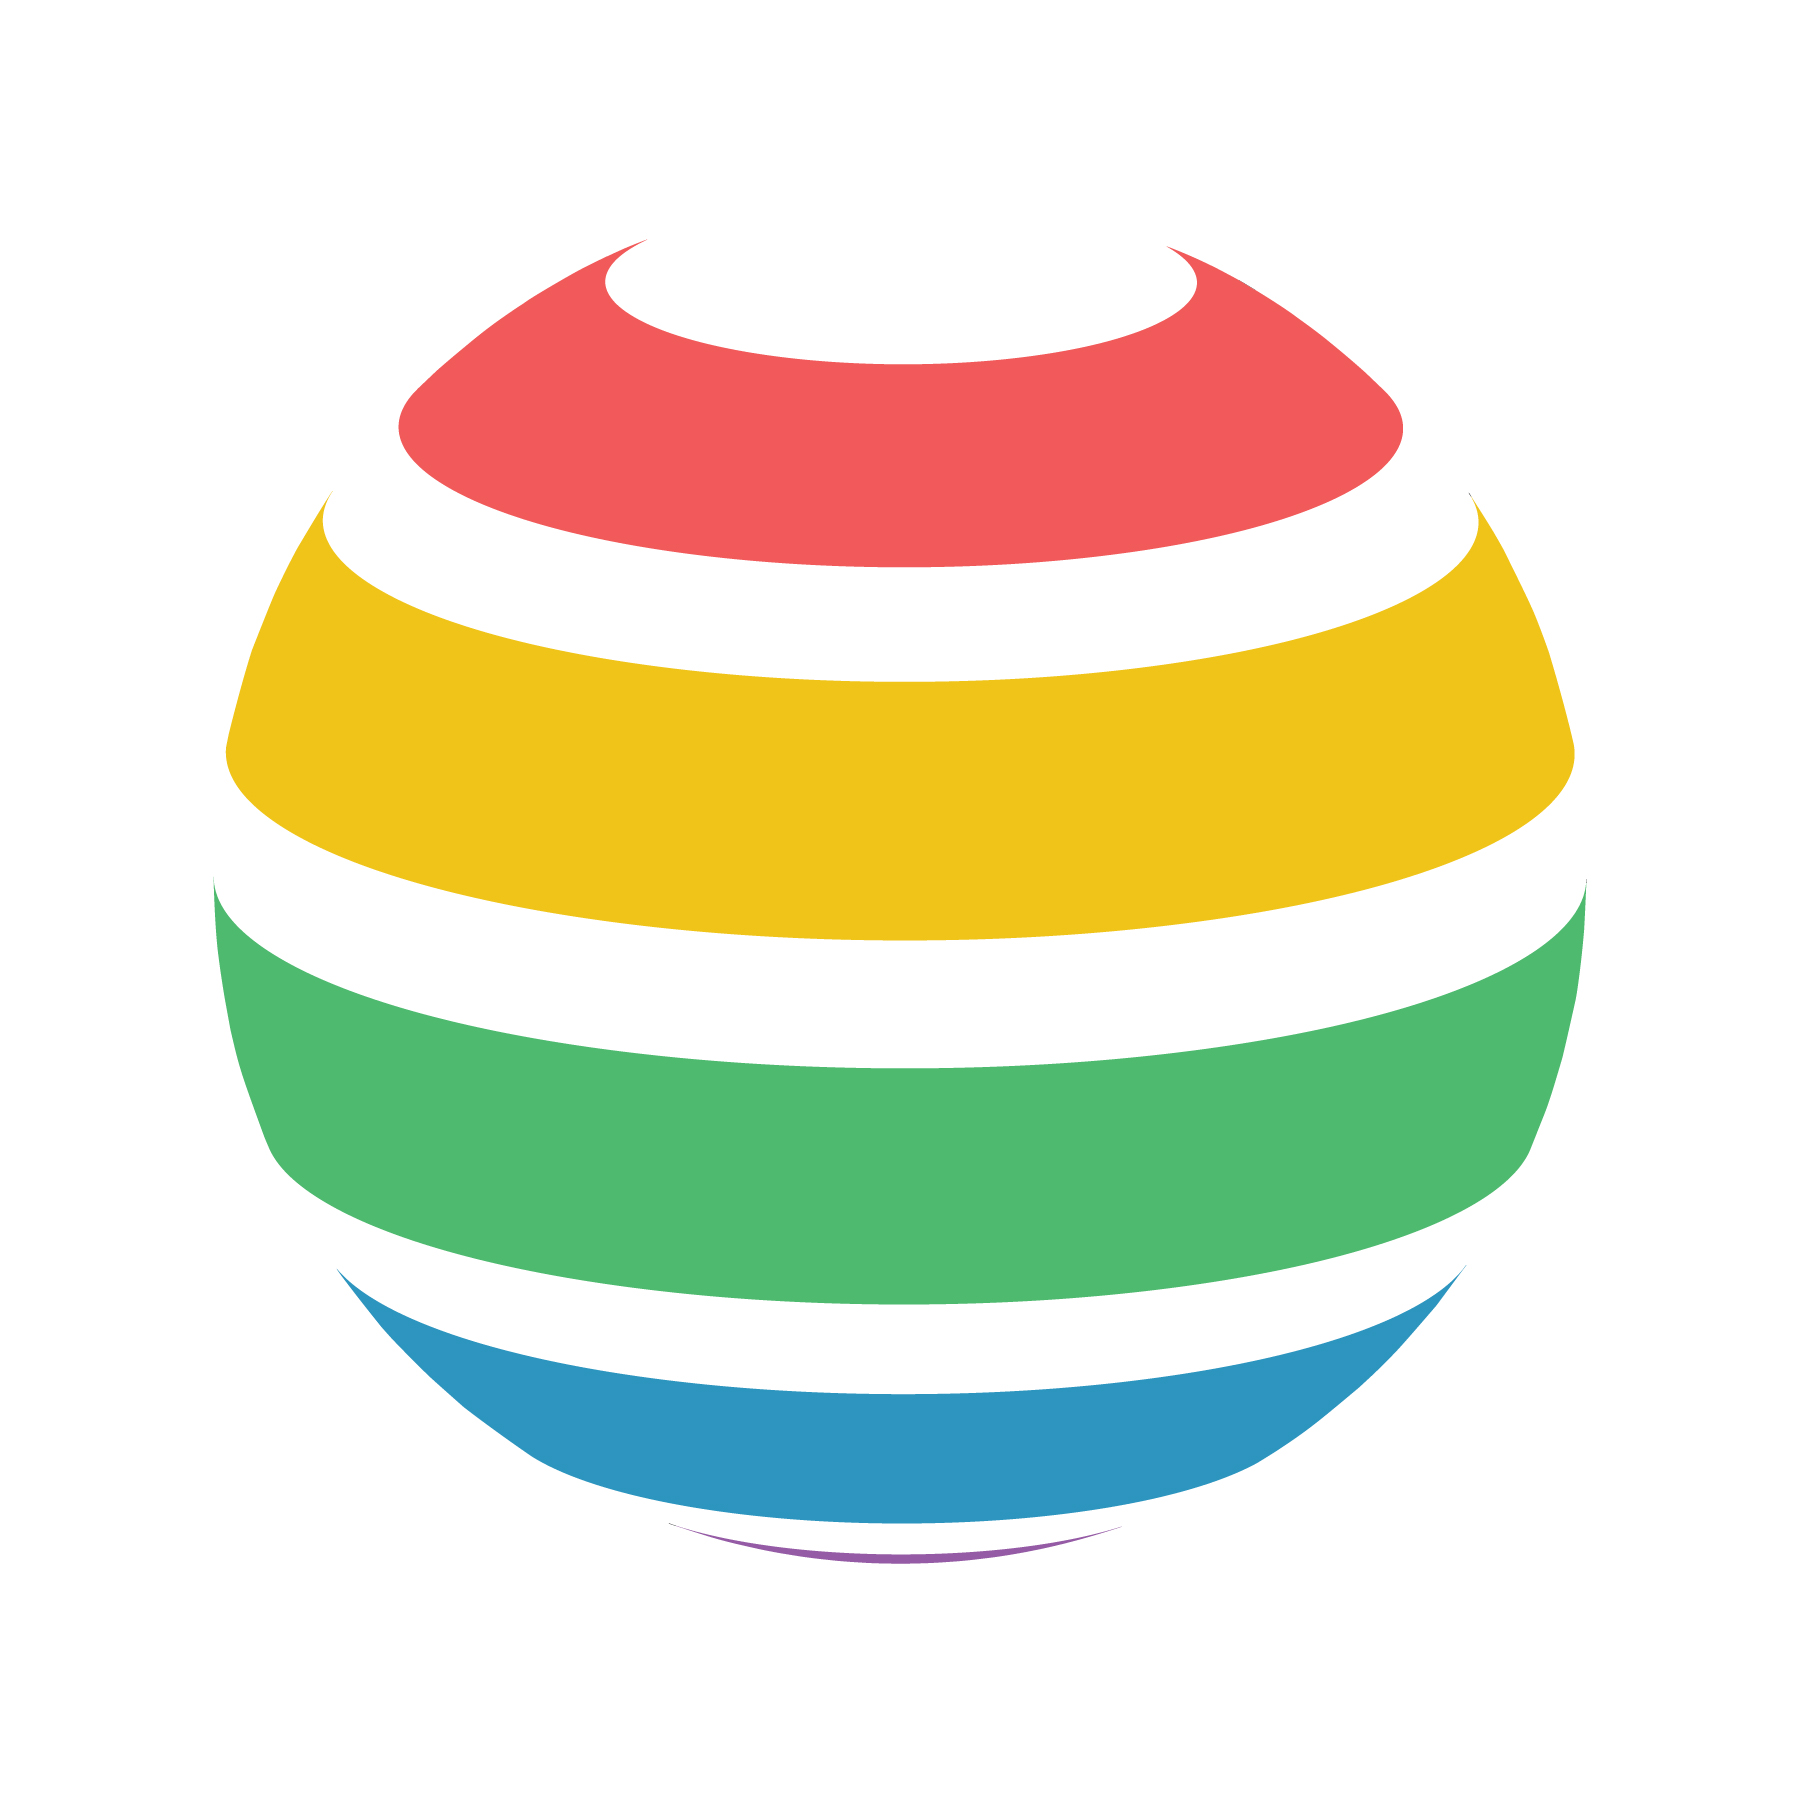 PrideWorld Symbol Design logo design by logo designer Dandelion Studio for your inspiration and for the worlds largest logo competition